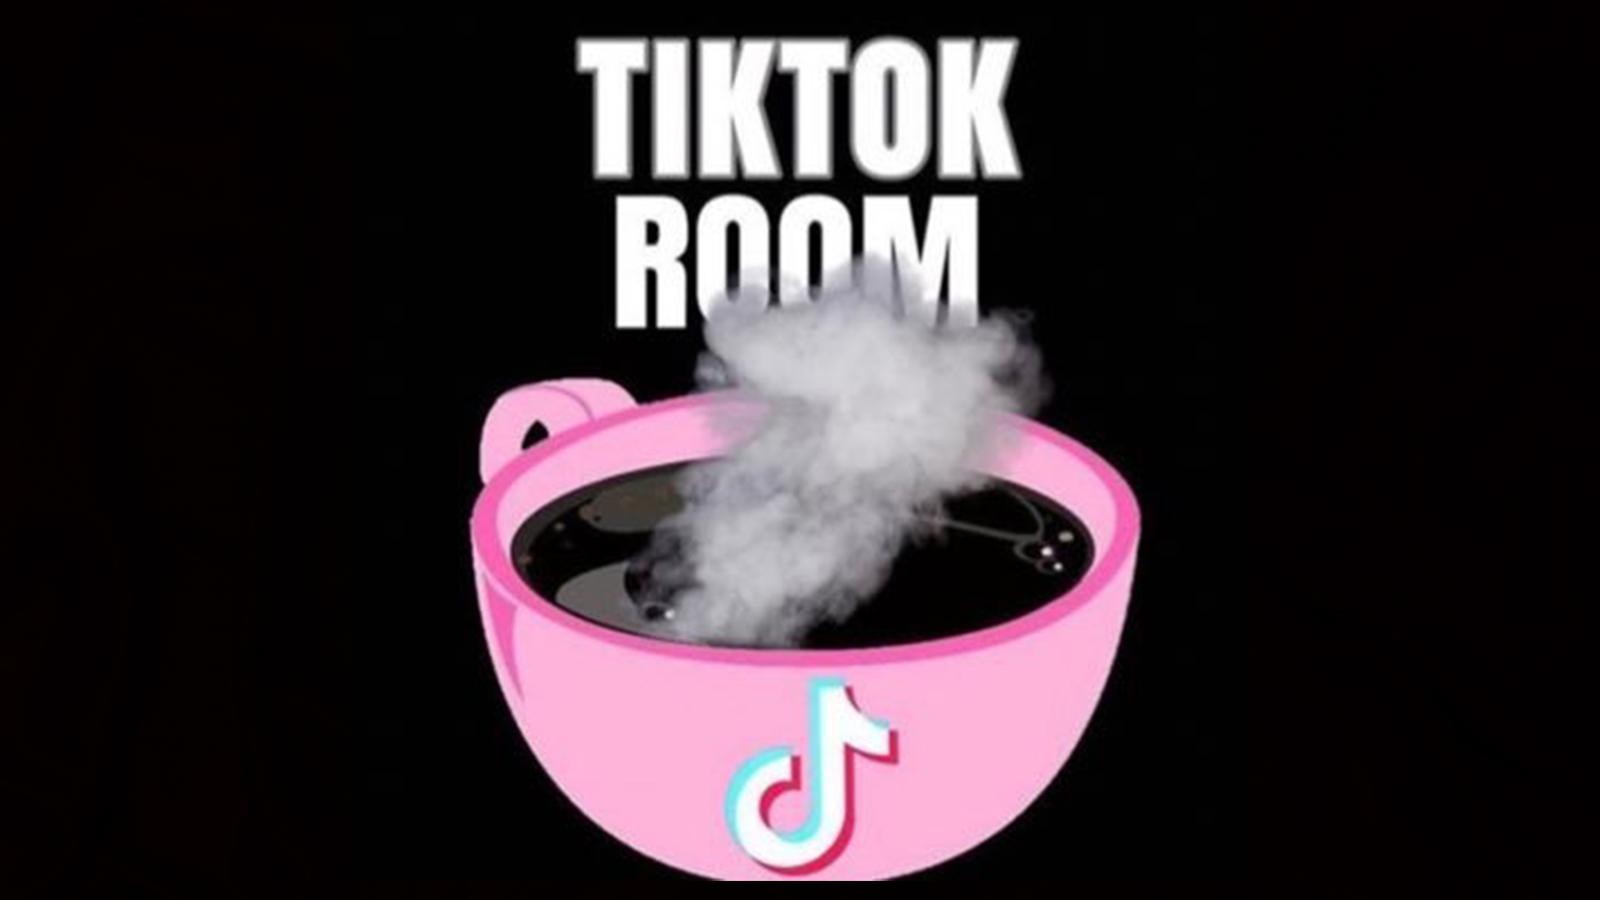 TikTokRoom instagram account disabled